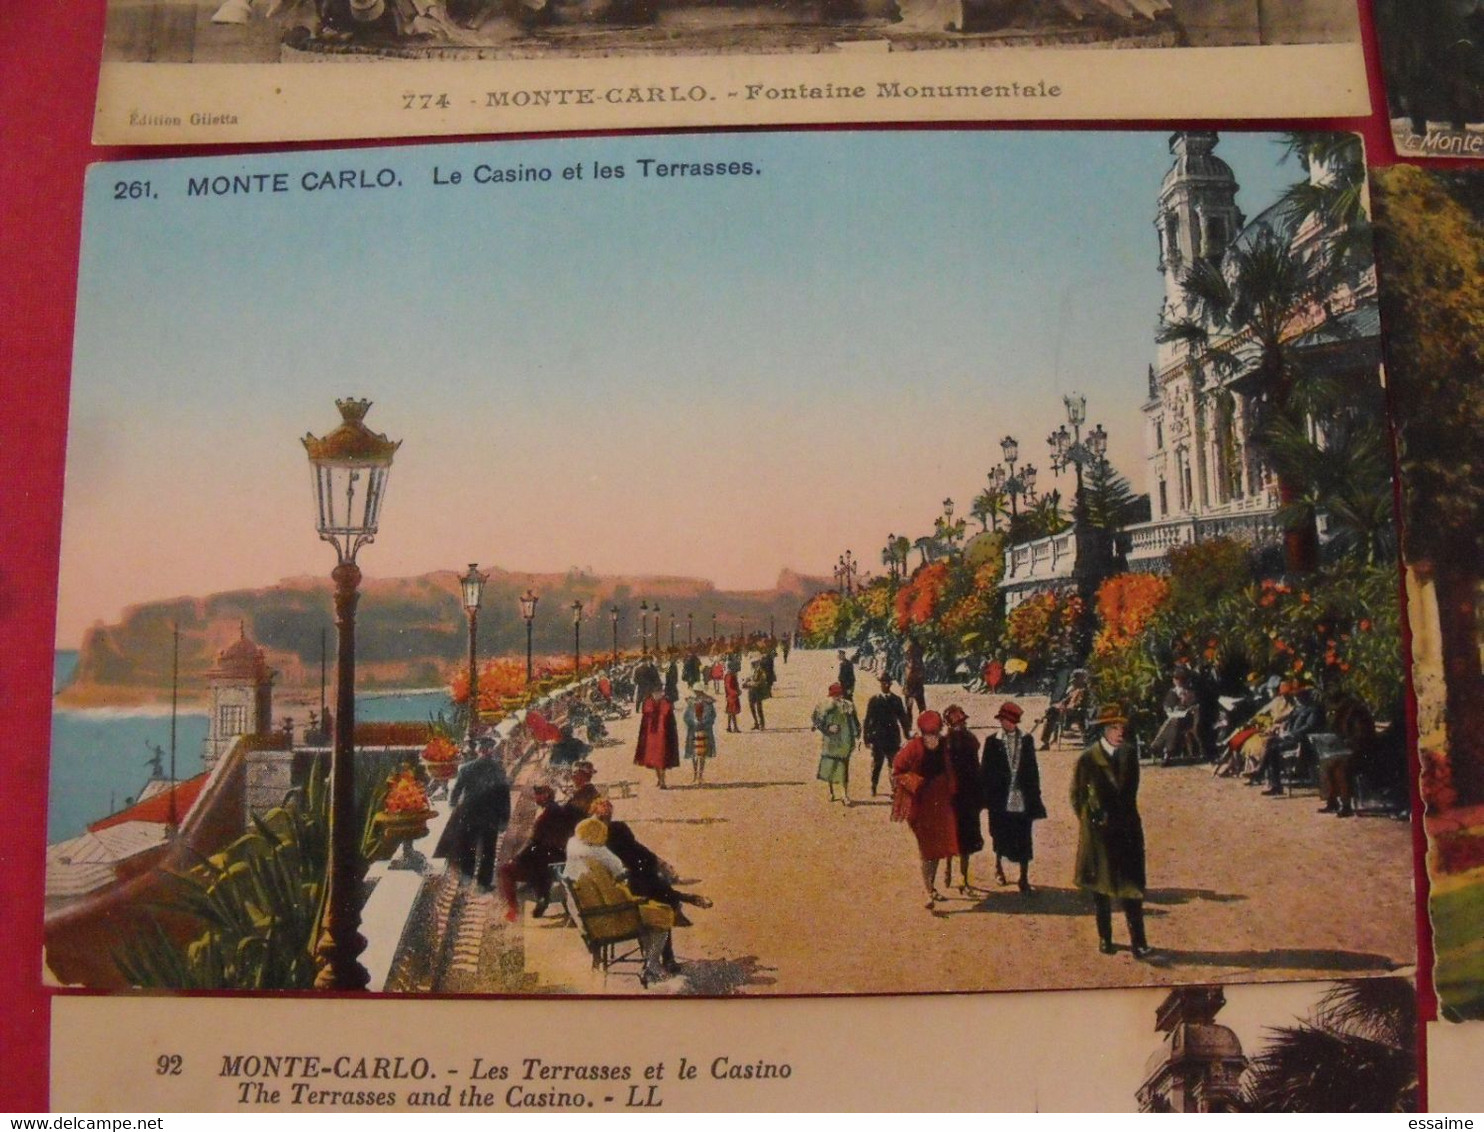 9 cartes postales Monaco Monte-Carlo. casino fontaine jardins sainte dévote principauté prince